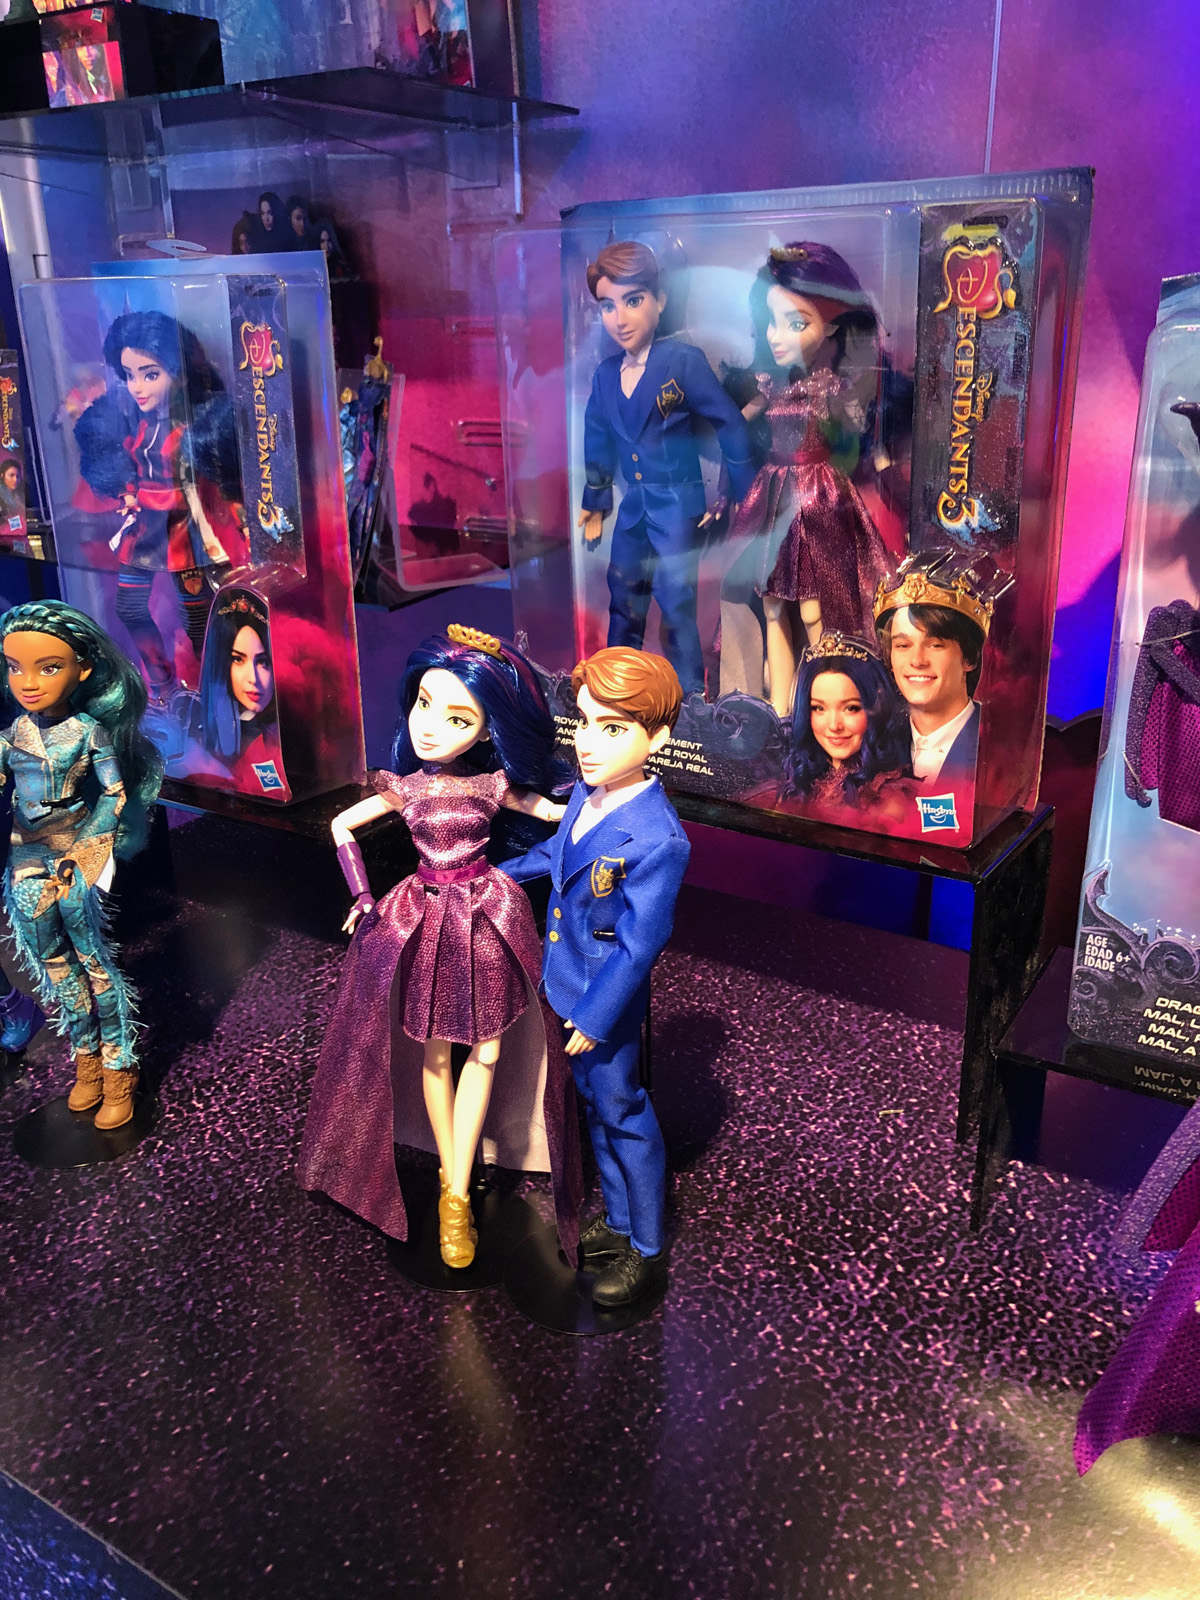 Disney Hasbro Toy Fair 2019